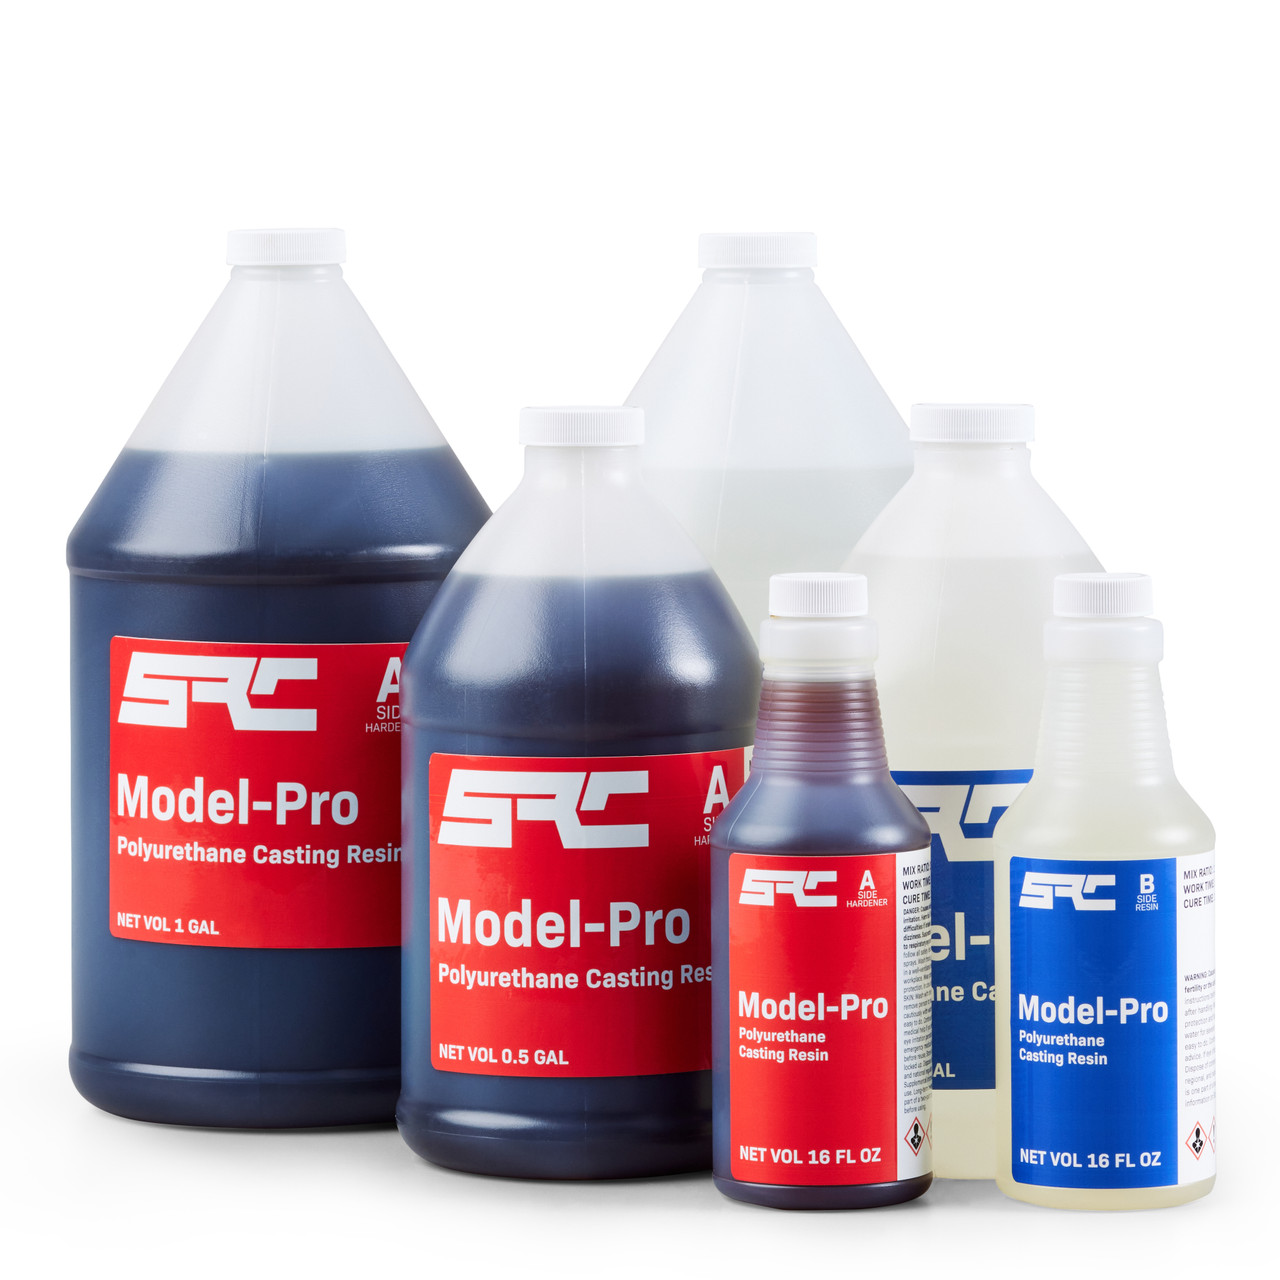 Model-Pro Polyurethane Casting Resin Liquid Plastic for Making Models and  Crafts - 10 Gallon Kit